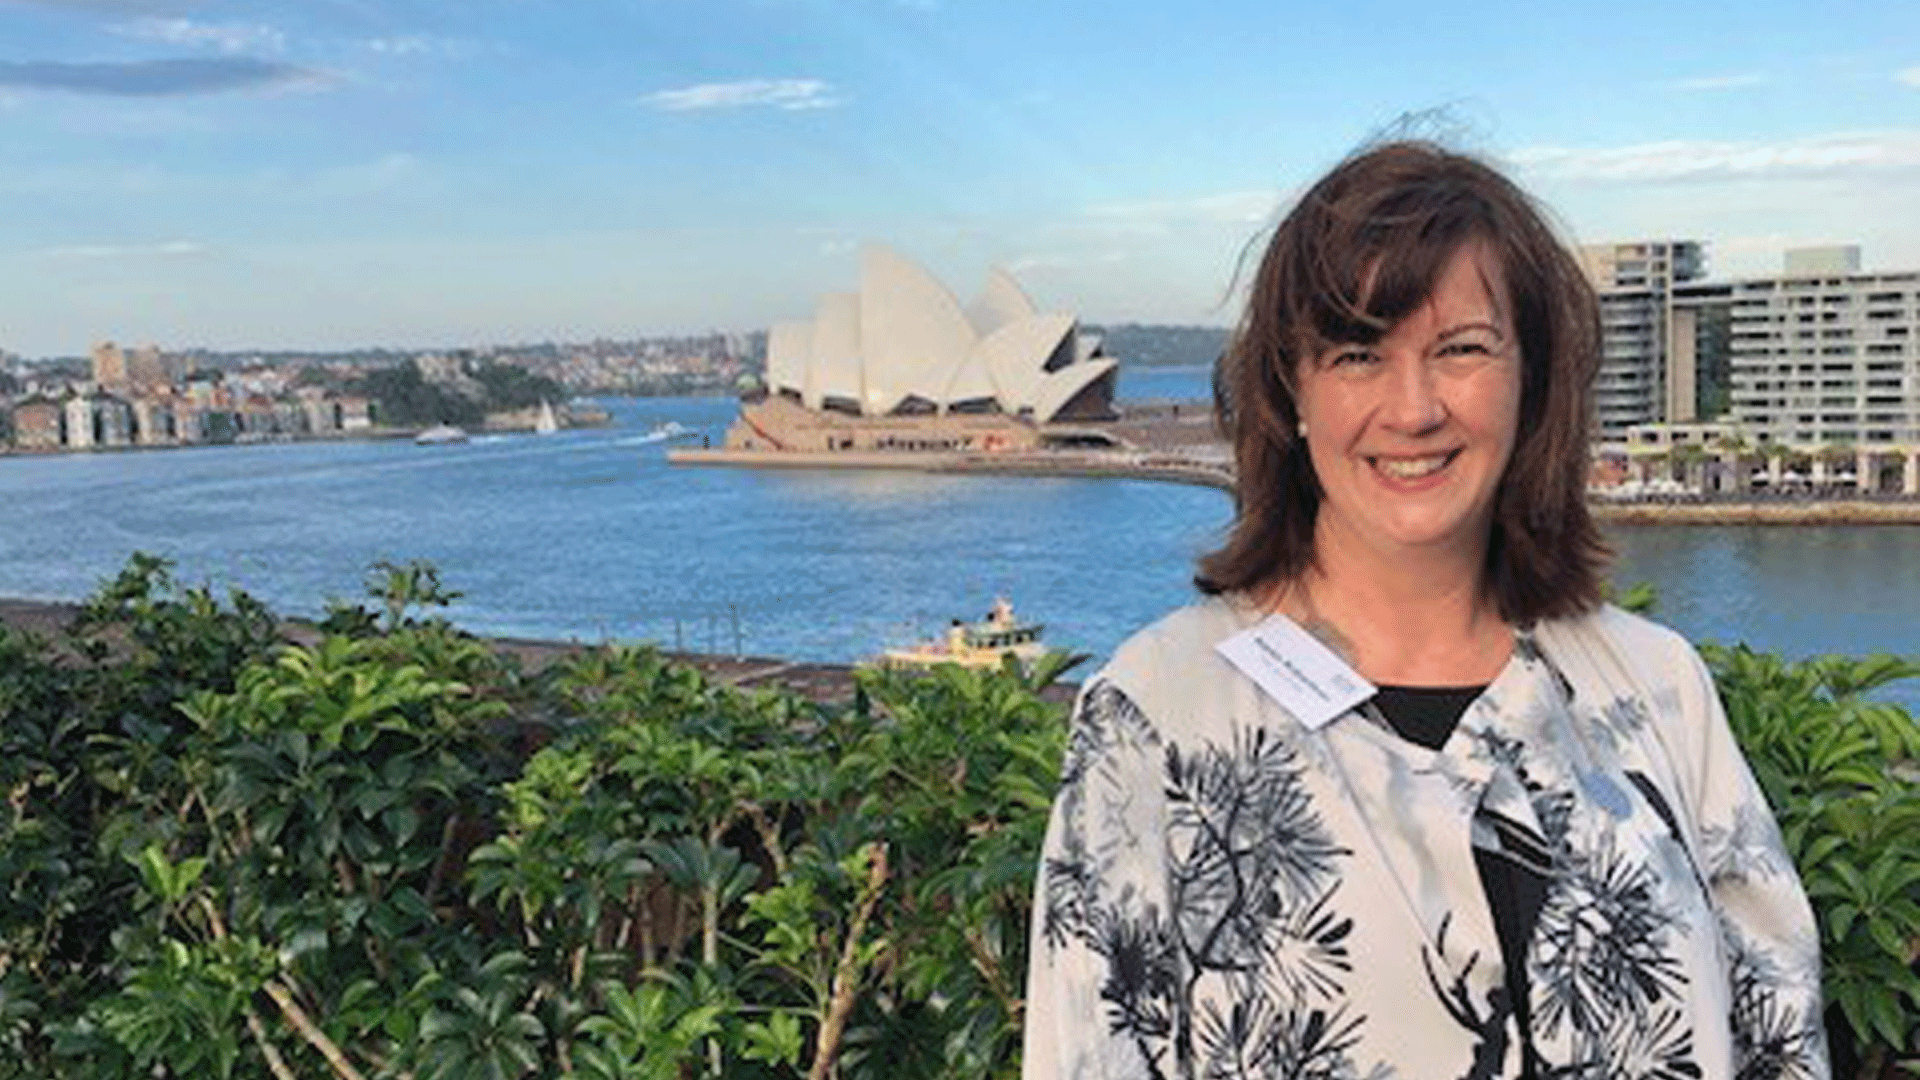 The health benefits of good work - AIA Australia's Karen Robertson